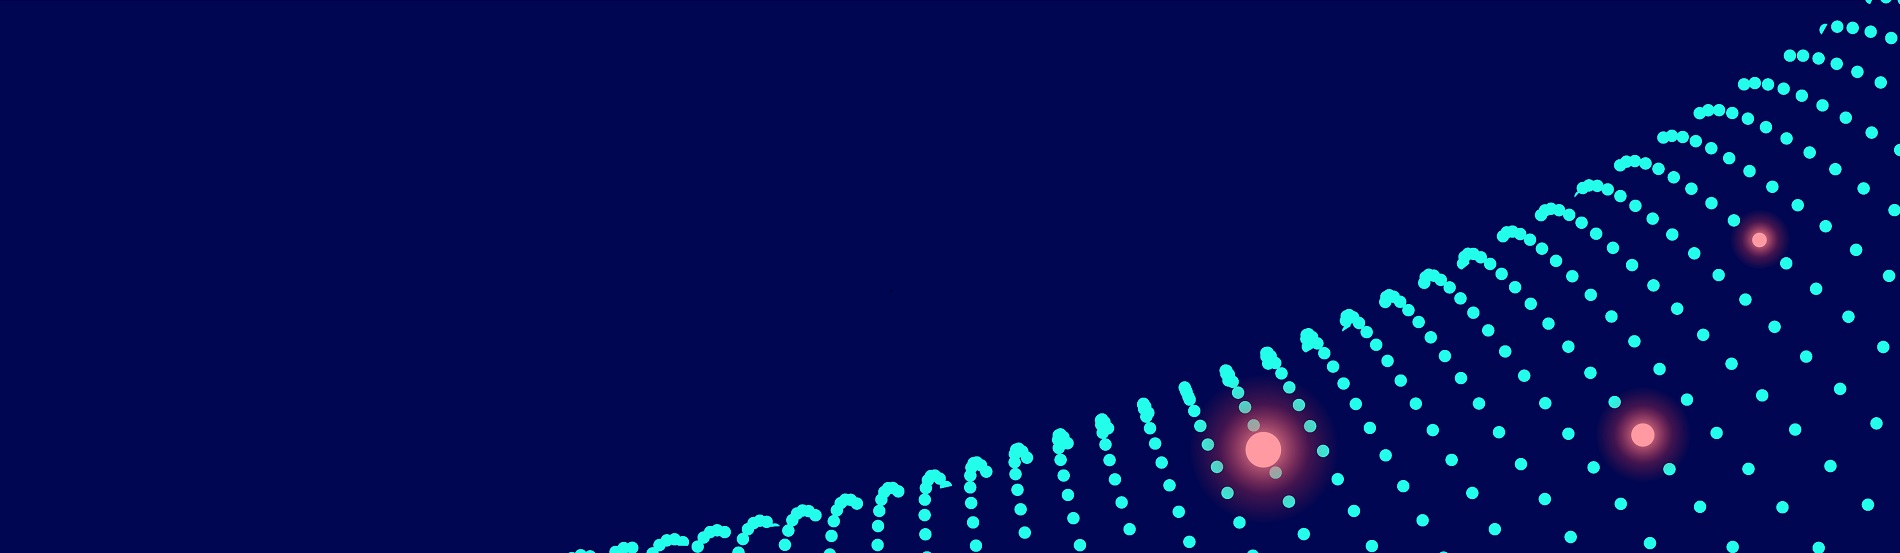 A blue background with a dot matrix